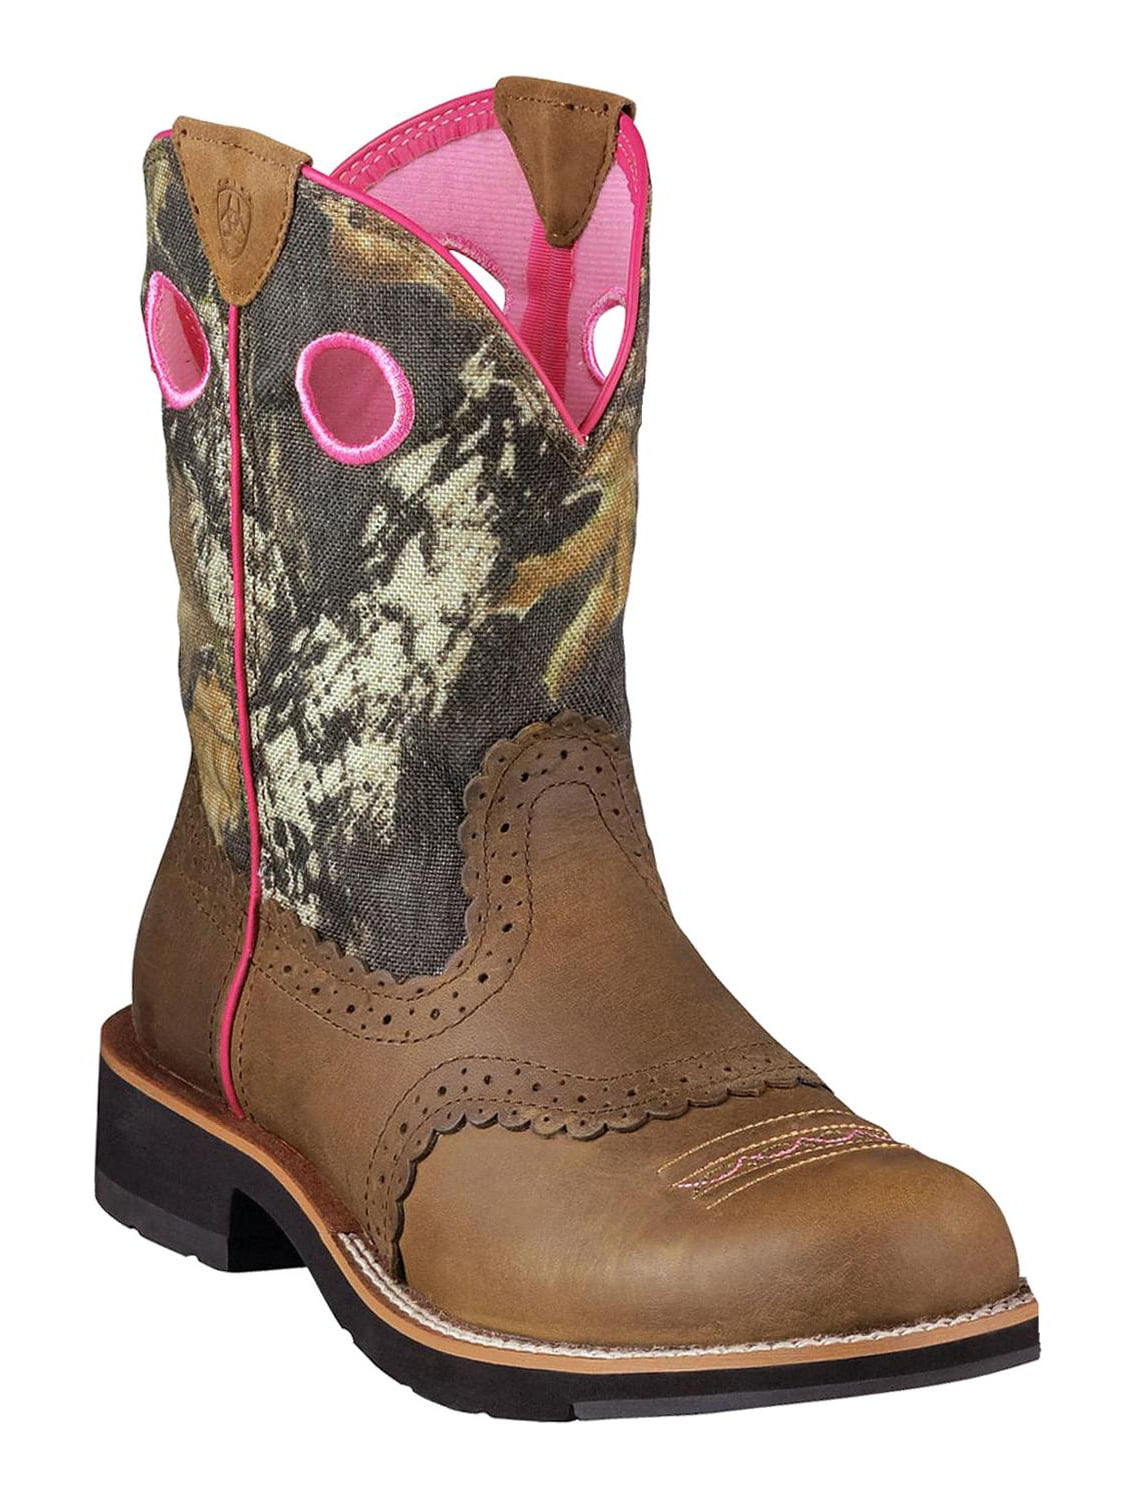 Ariat Women's Western Boots Camo Fatbaby 